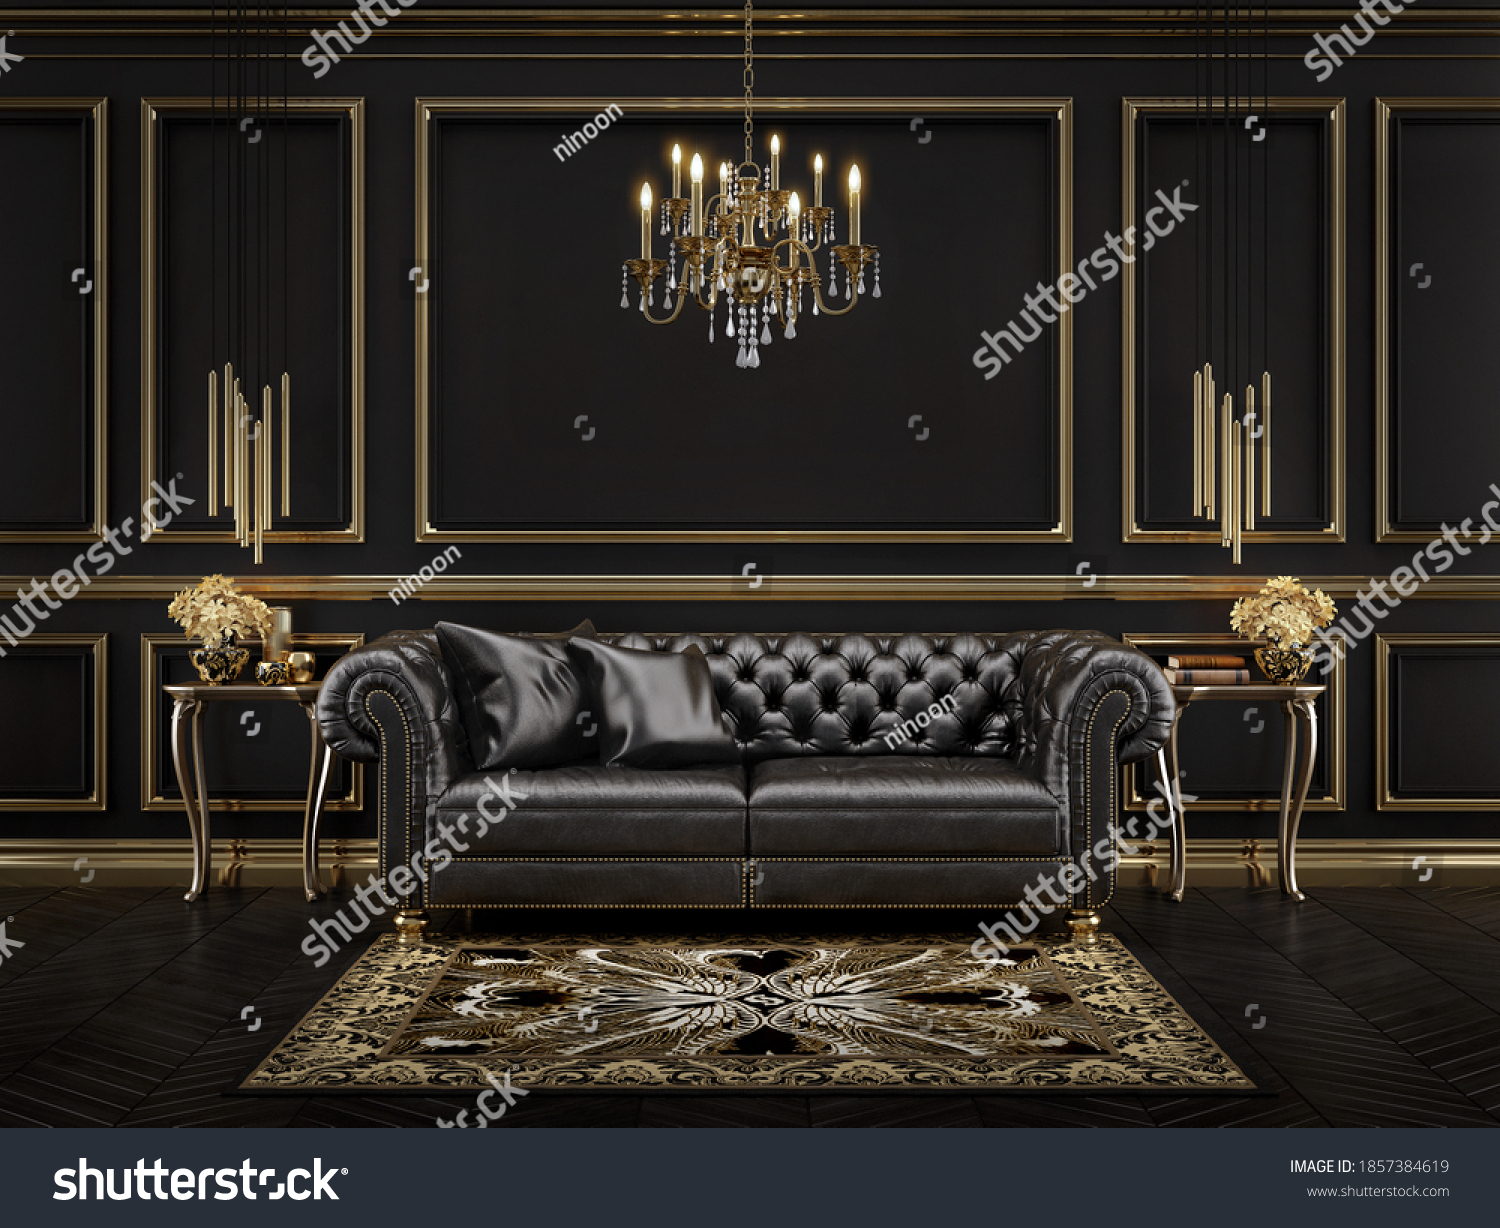 Classic Black Gold Interior Black Leather Stock Illustration 1857384619